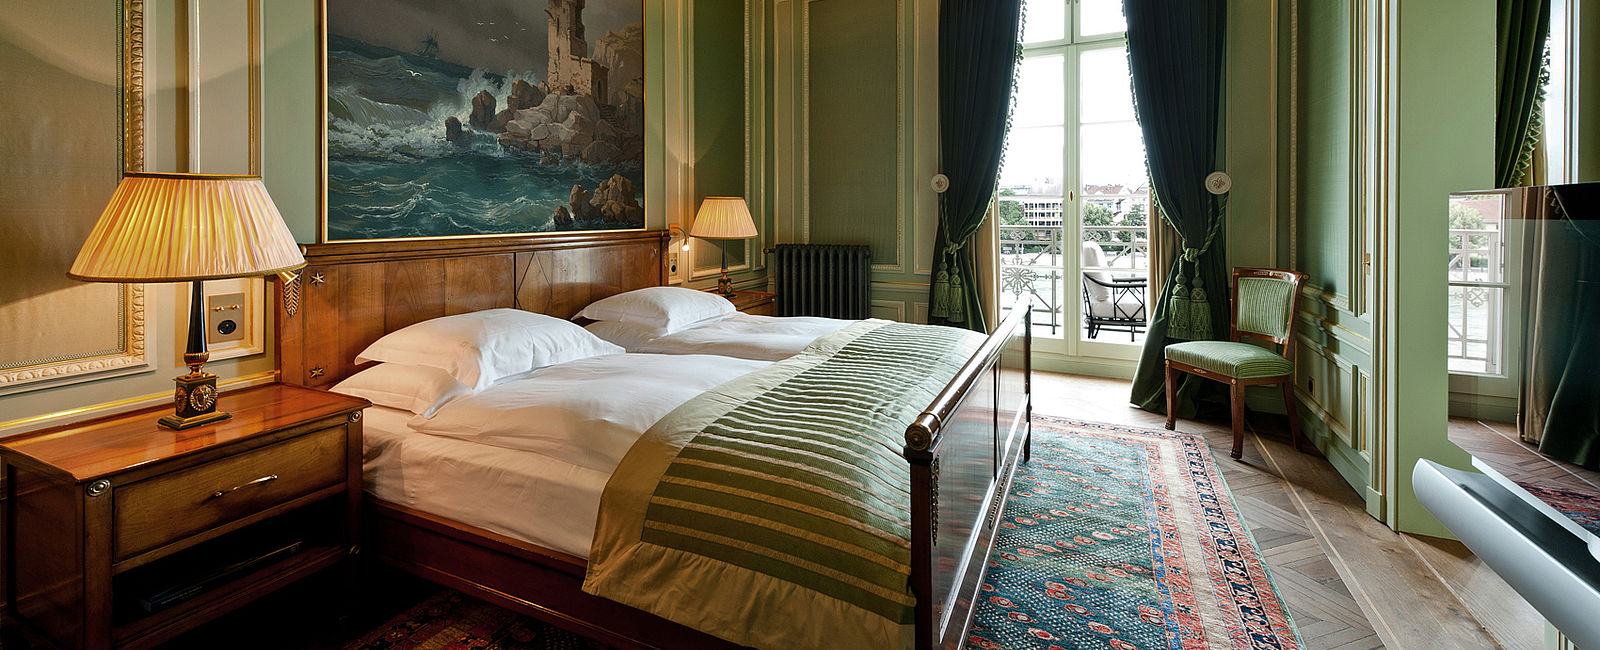 HOTEL NEWS
 Grand Hotel Les Trois Rois ist das GaultMillau Hotel des Jahres 2020 
